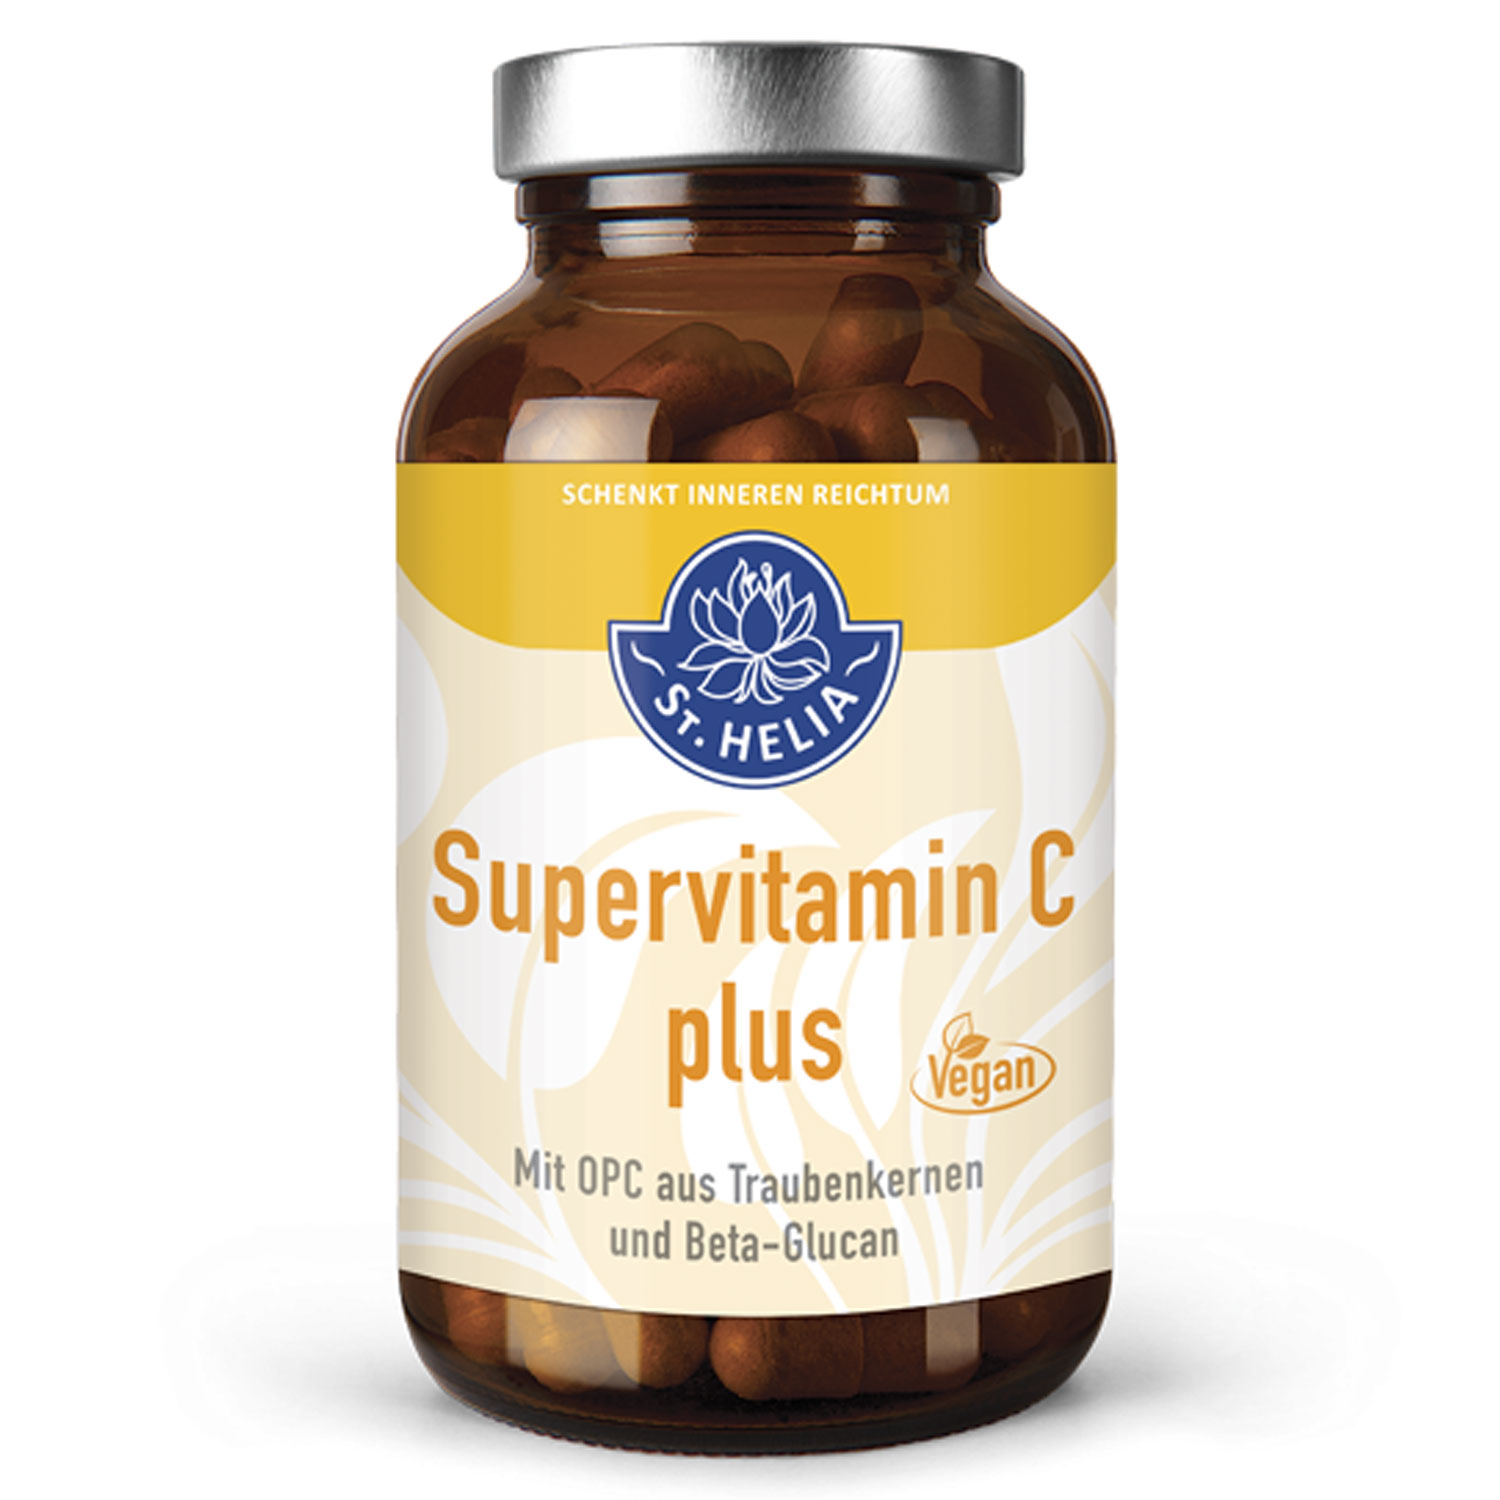 Supervitamin C plus vegan von St. Helia - 120 Kapseln